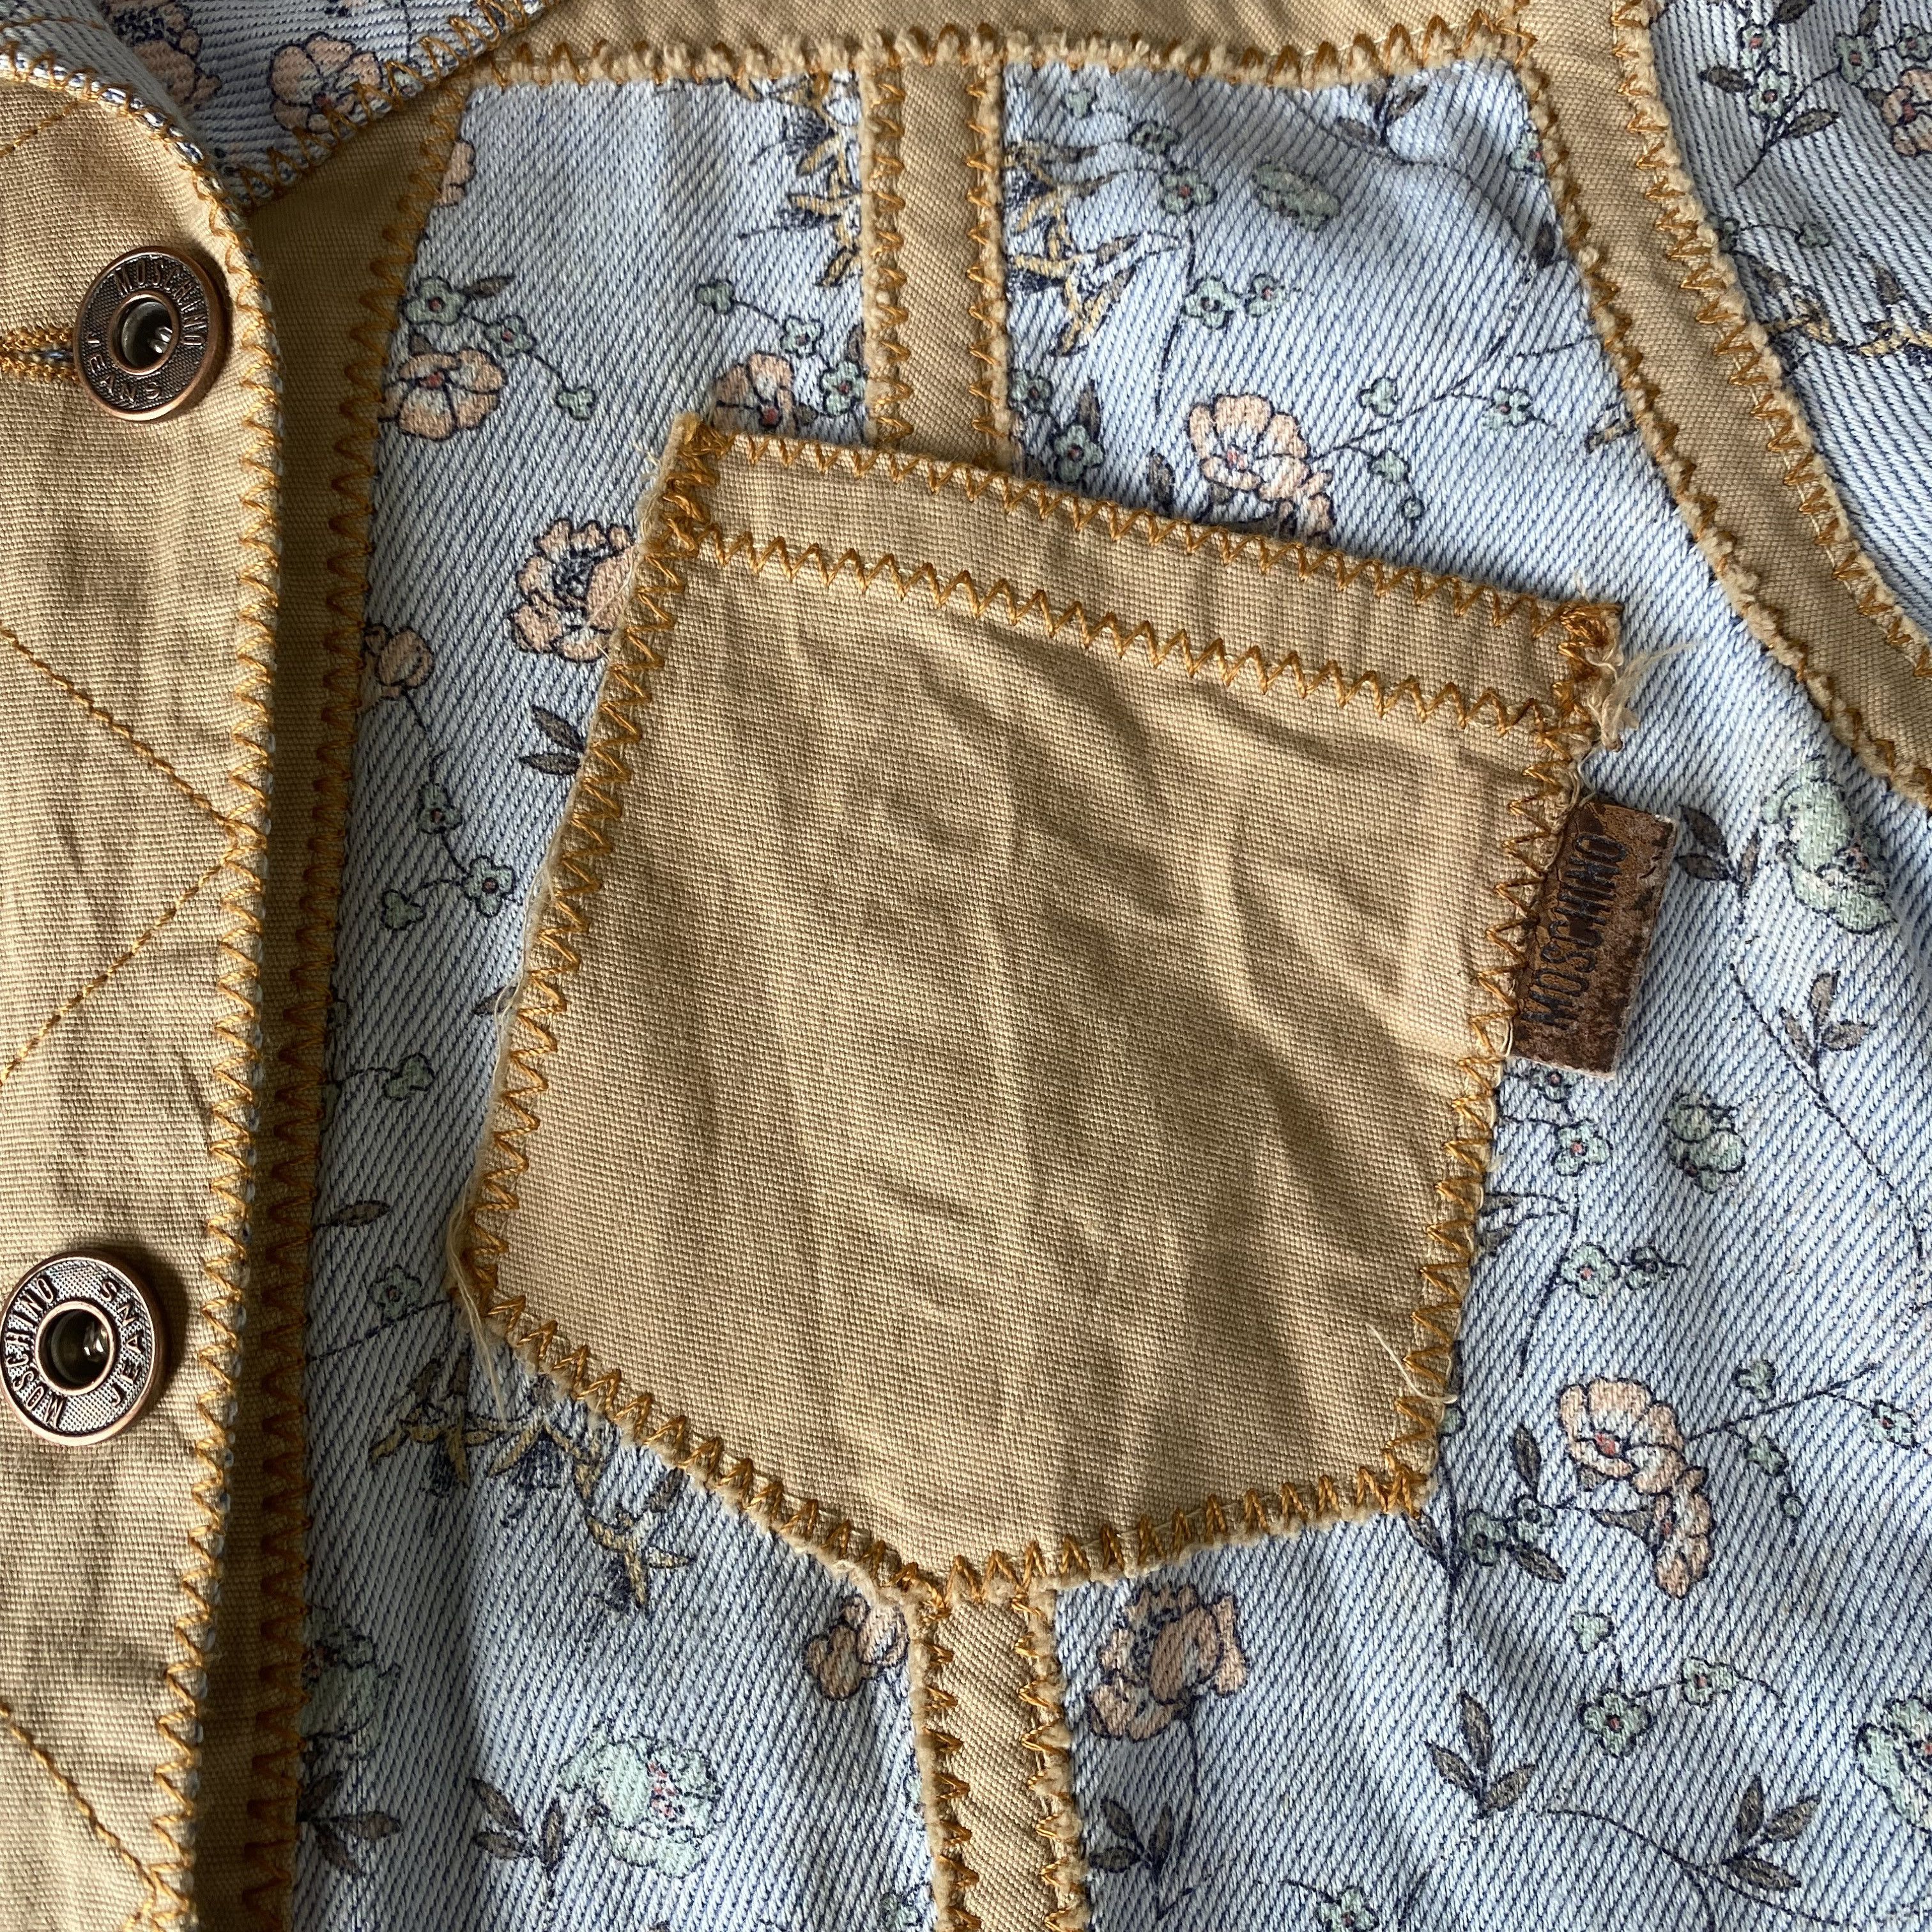 Vintage MOSCHINO Jeans Vintage Light Blue Brown Floral Prints Jacket Size M / US 6-8 / IT 42-44 - 6 Thumbnail